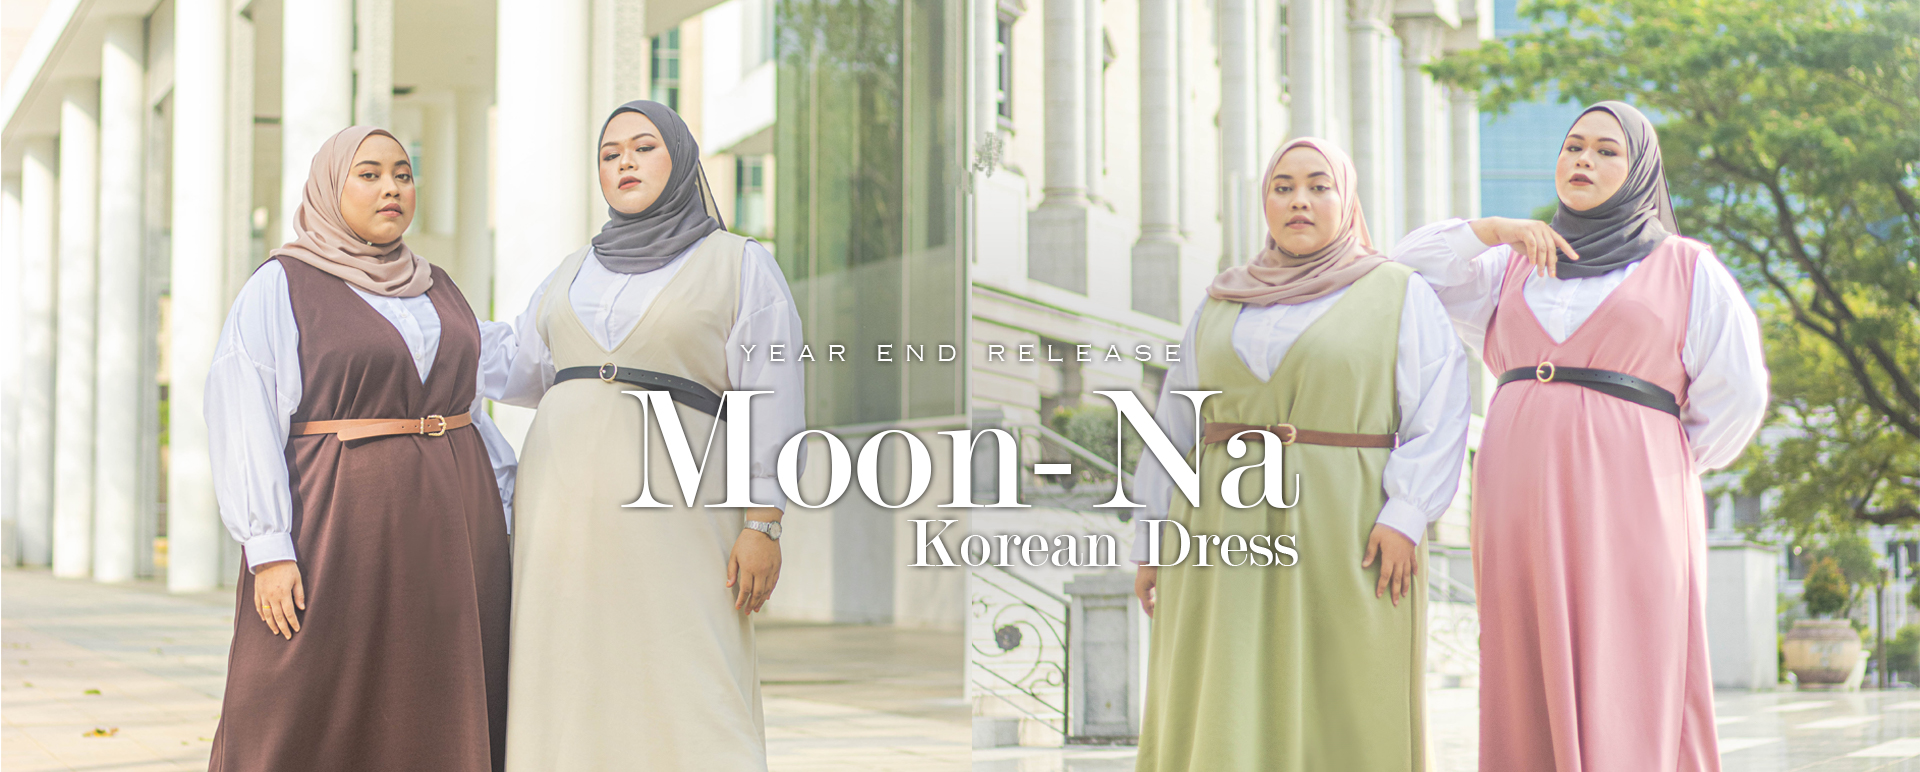 Moon-Na Korean Dress